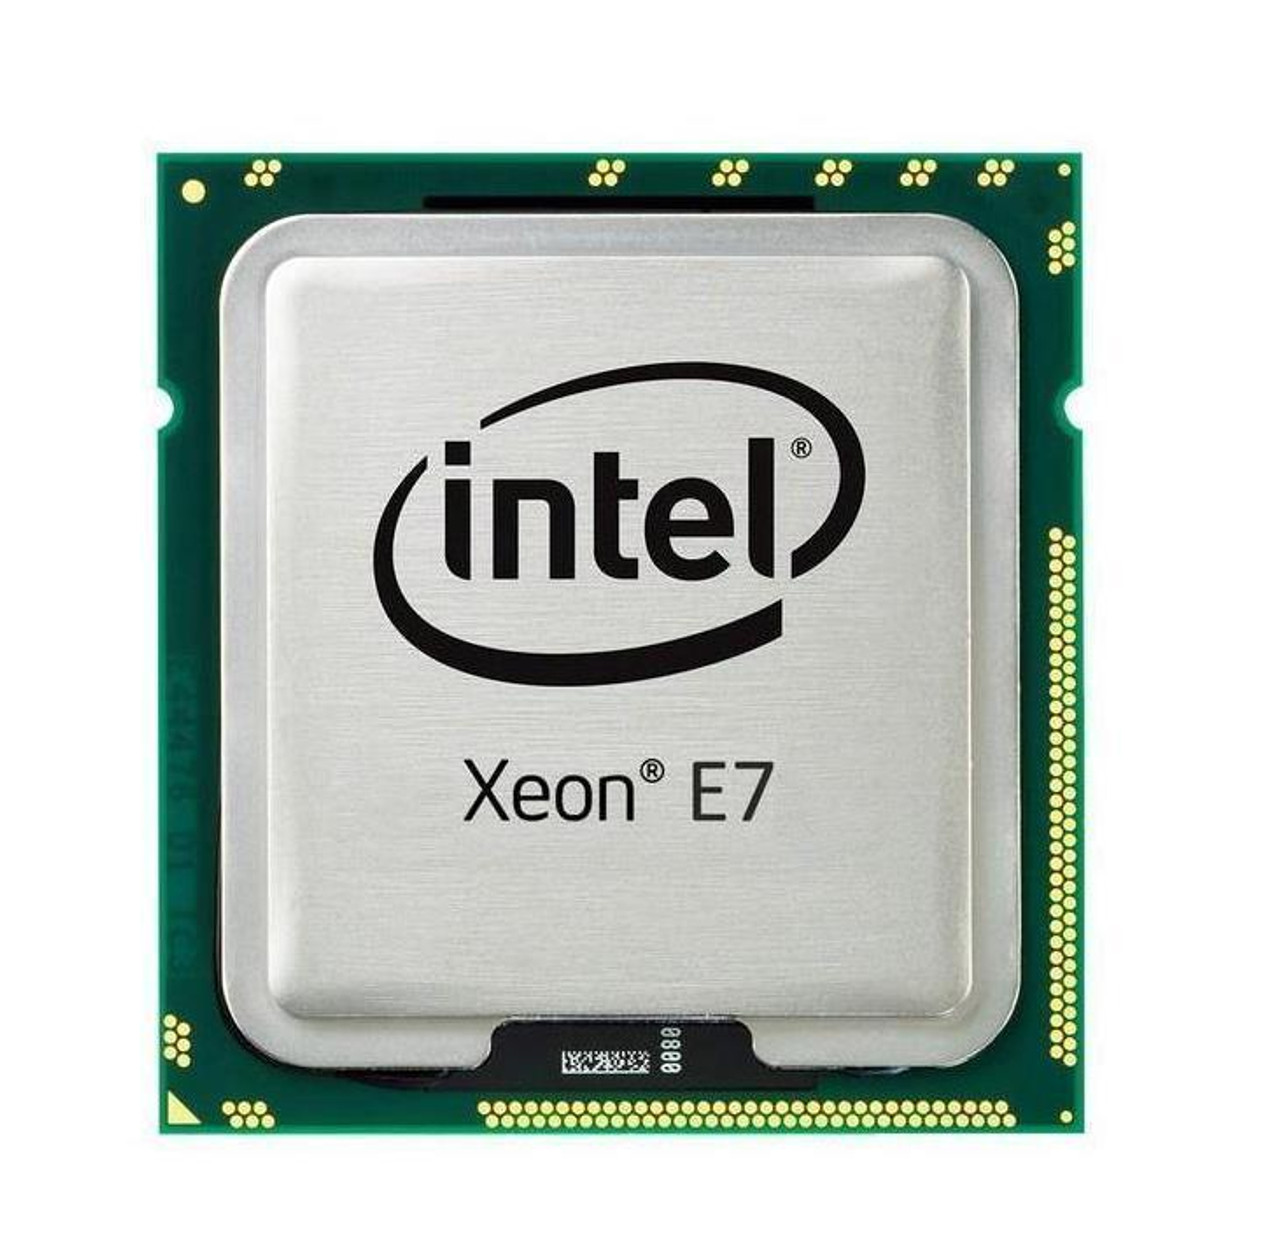 Fujitsu Intel Xeon E7-4820 v3 Deca-core (10 Core) 1.90 GHz Processor Upgrade - 25 MB L3 Cache - 64-bit Processing - 22 nm - Socket R LGA-2011 - 115